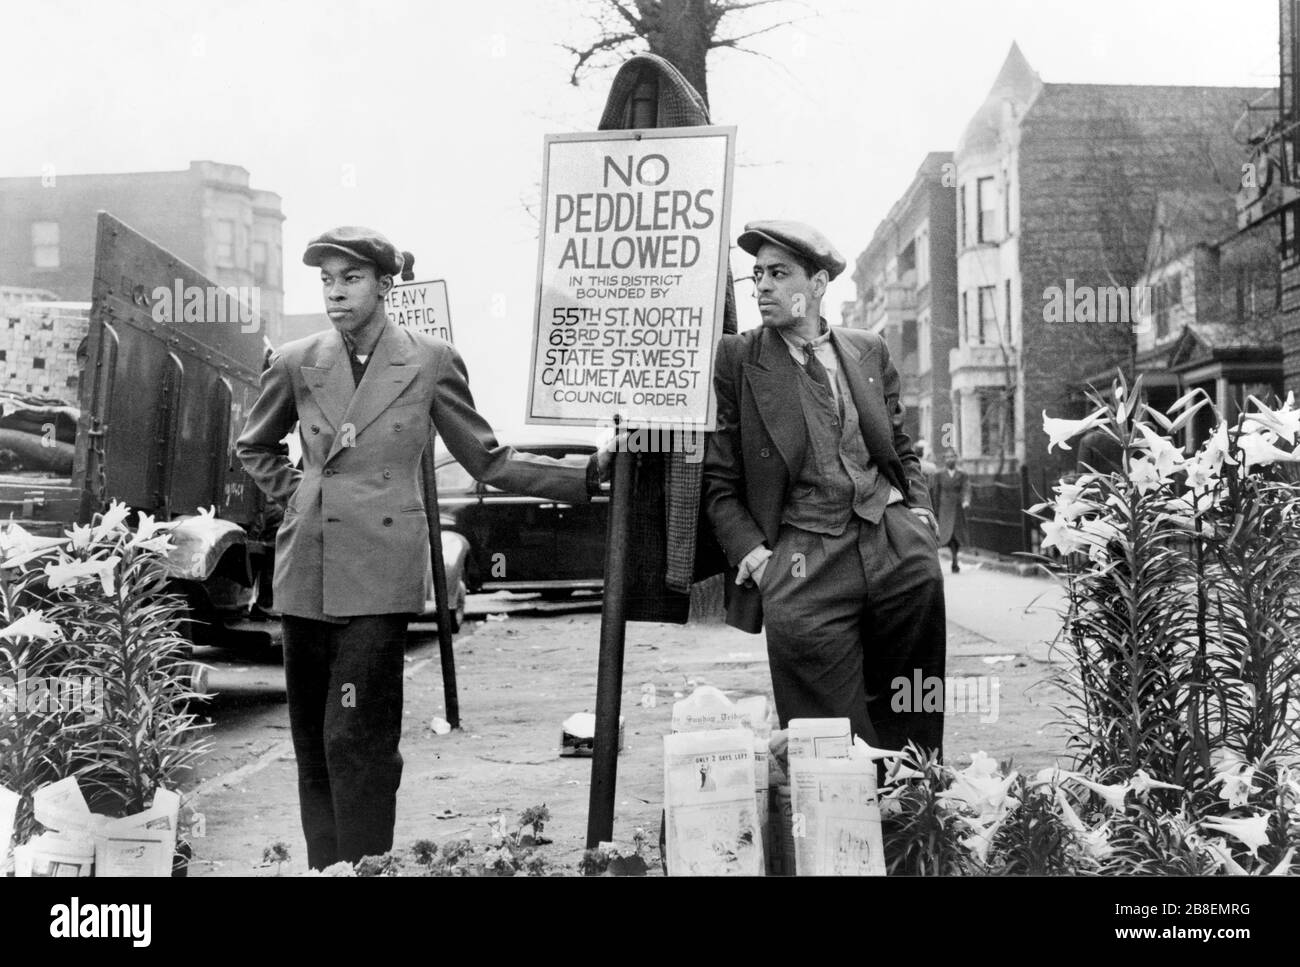 Peddlers am Ostermorgen auf dem Garfield Boulevard, Chicago, Illinois, USA, Russell Lee für U.S. Farm Security Administration, April 1941 Stockfoto